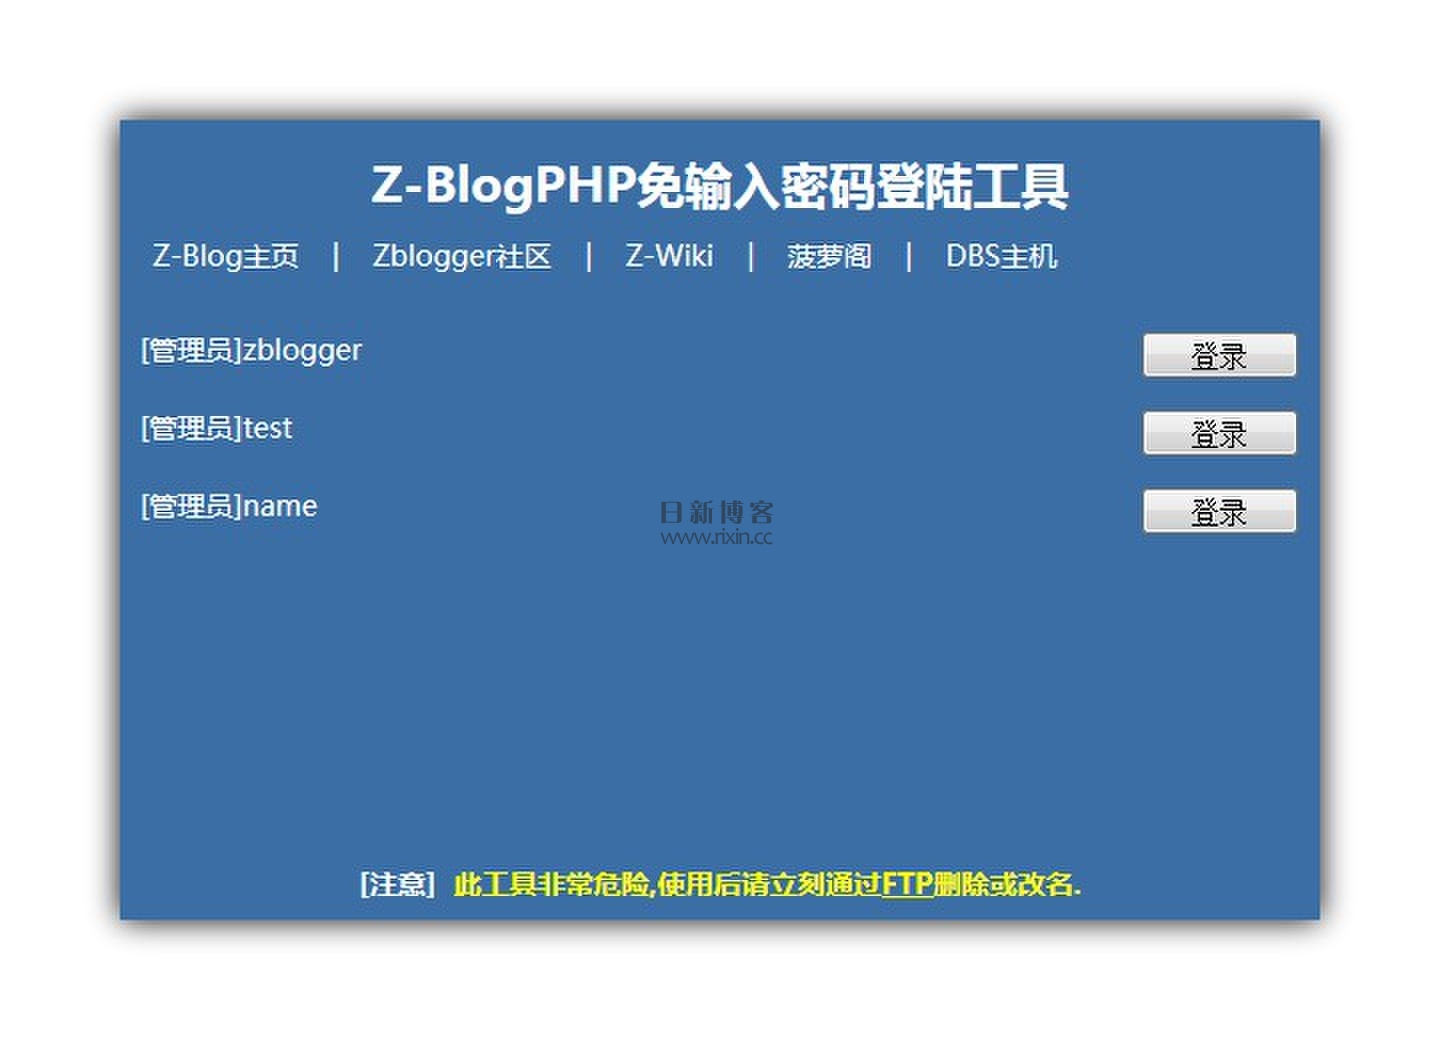 Z-BlogPHP密码找回工具